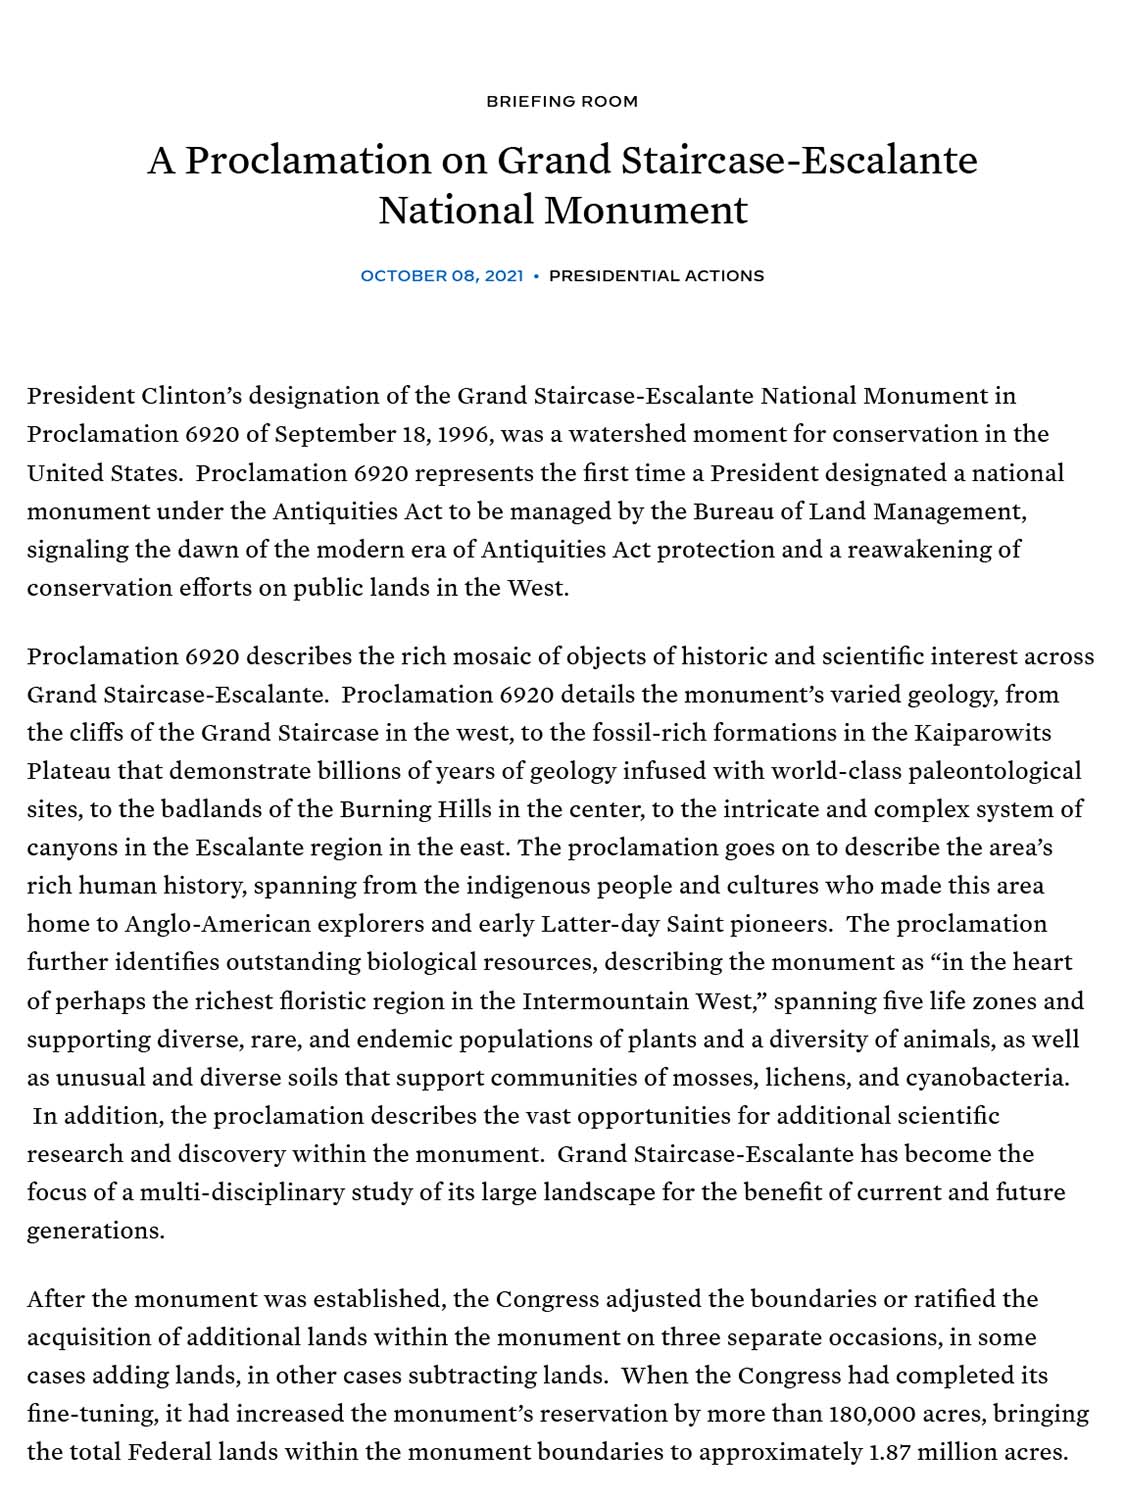 President Biden restores Grand Staircase-Escalante National Monument